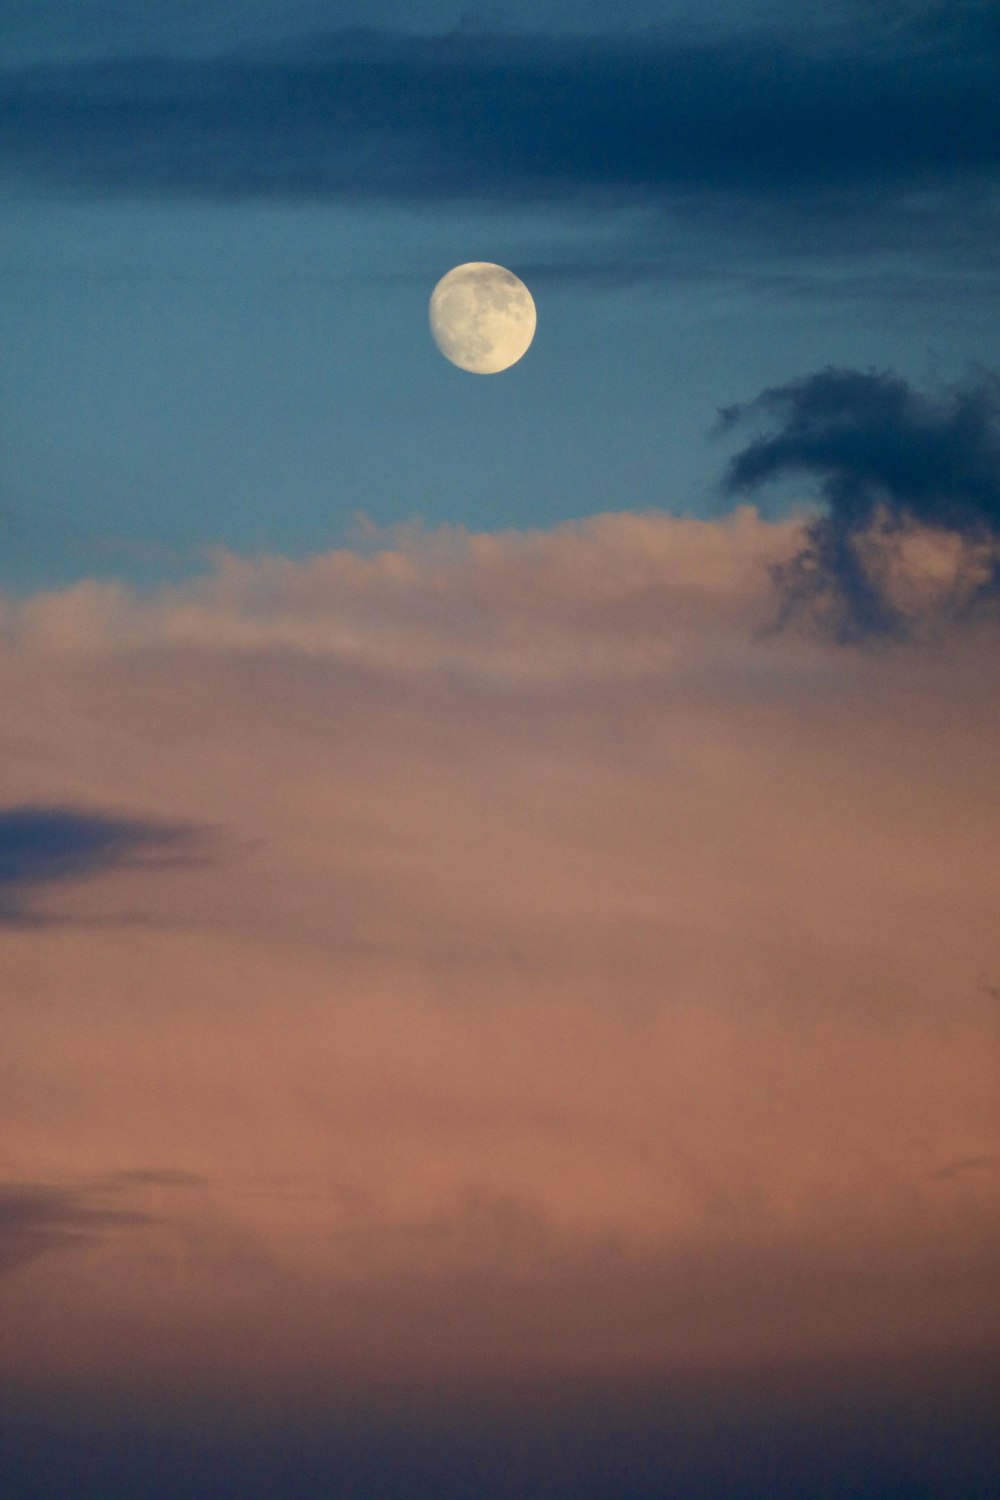 full moon over dark clouds